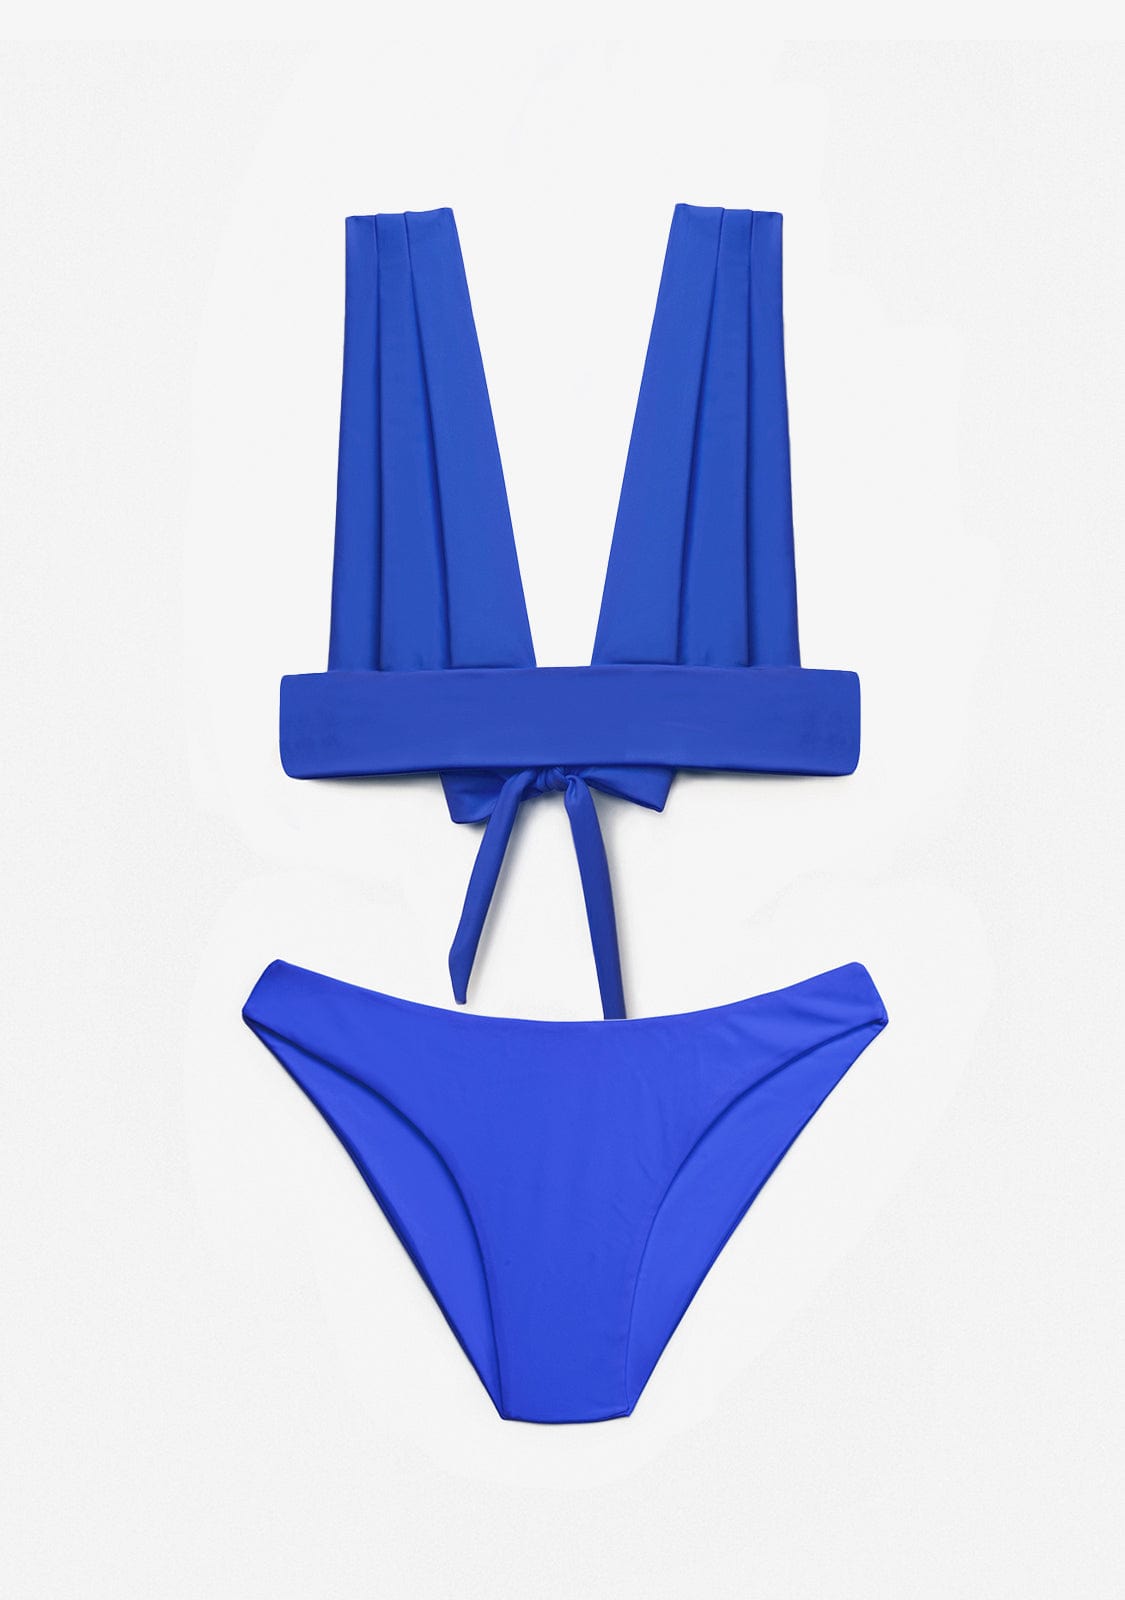 Bikini Top Hanan + Braquita Gala Azul índigo